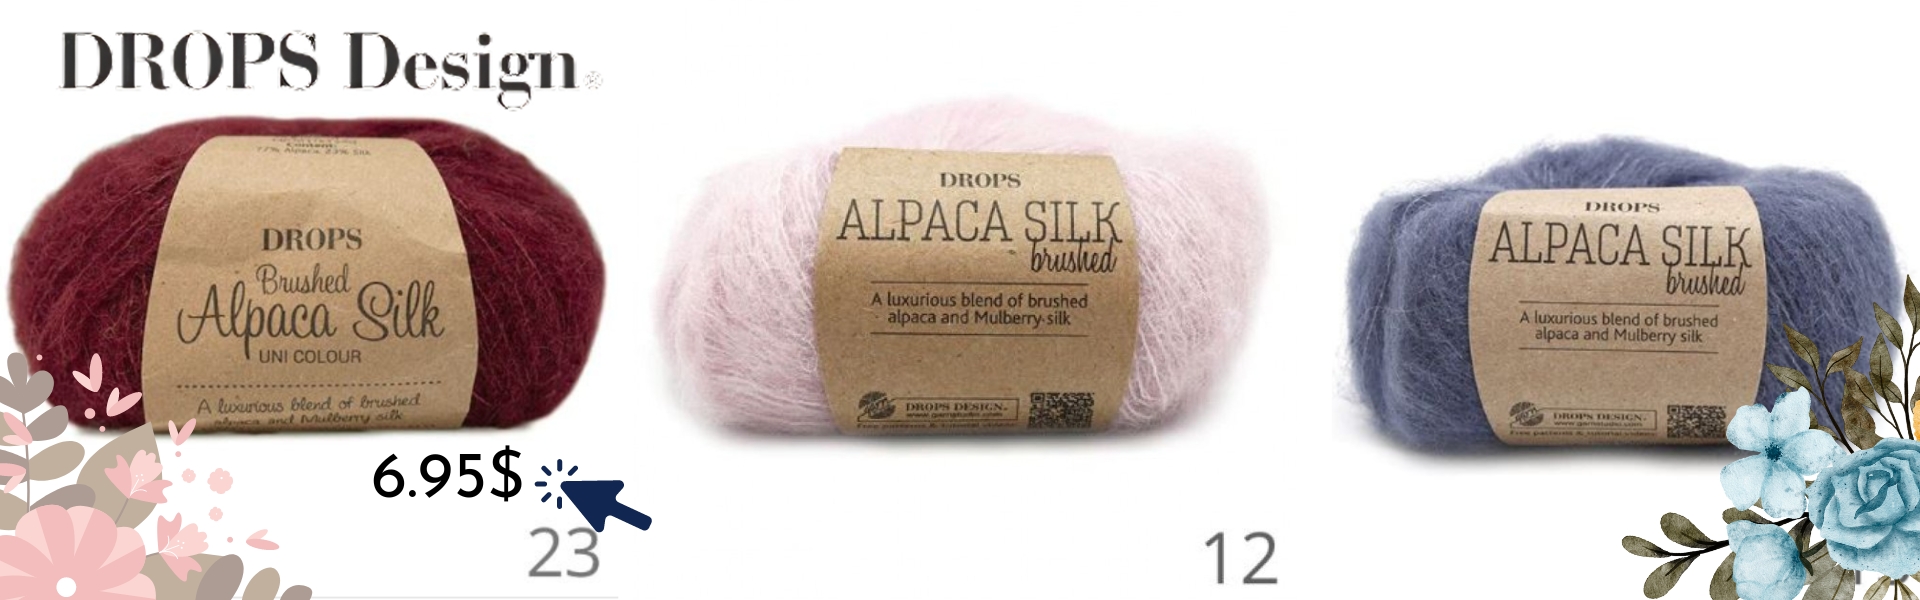 drops alpaca silk